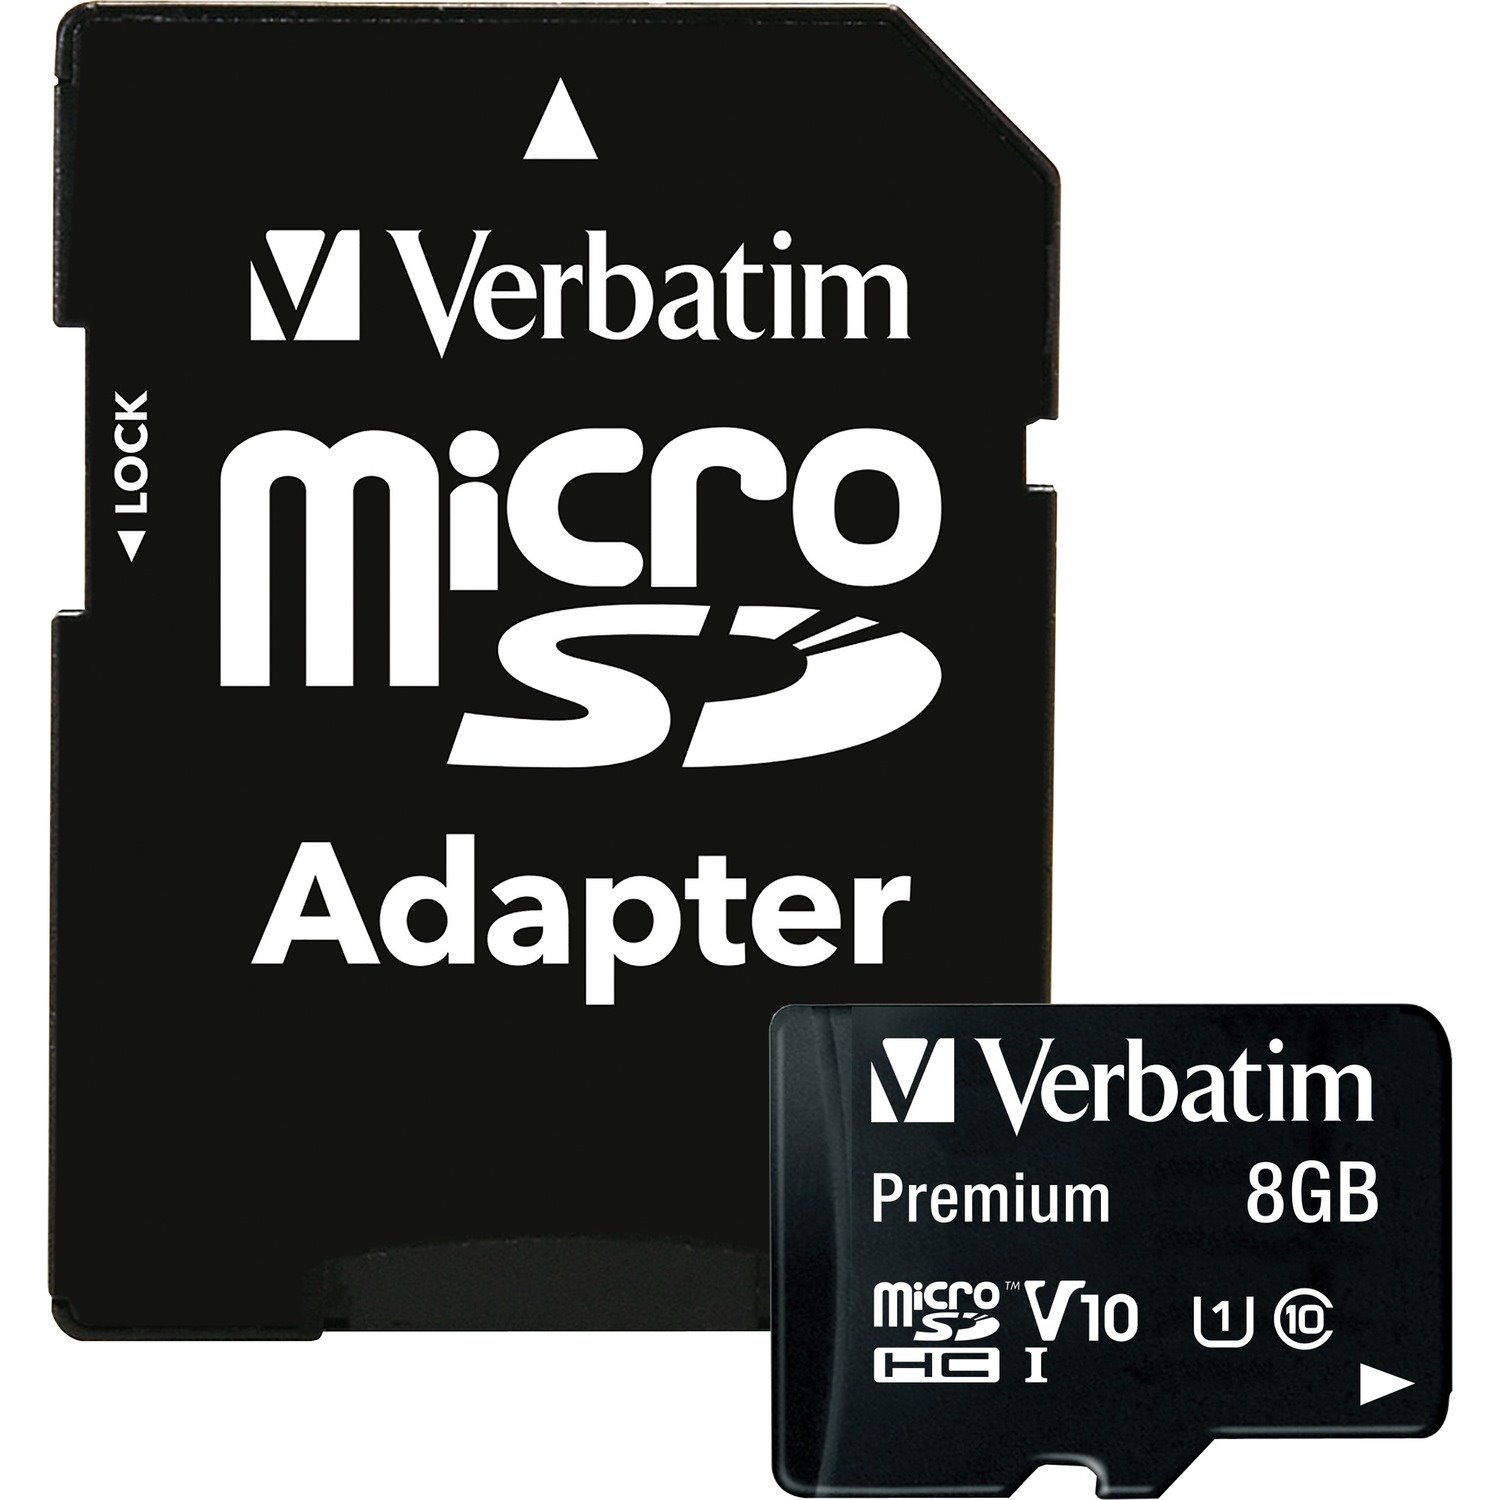 Verbatim 8GB Premium microSDHC Memory Card with Adapter, UHS-I Class 10